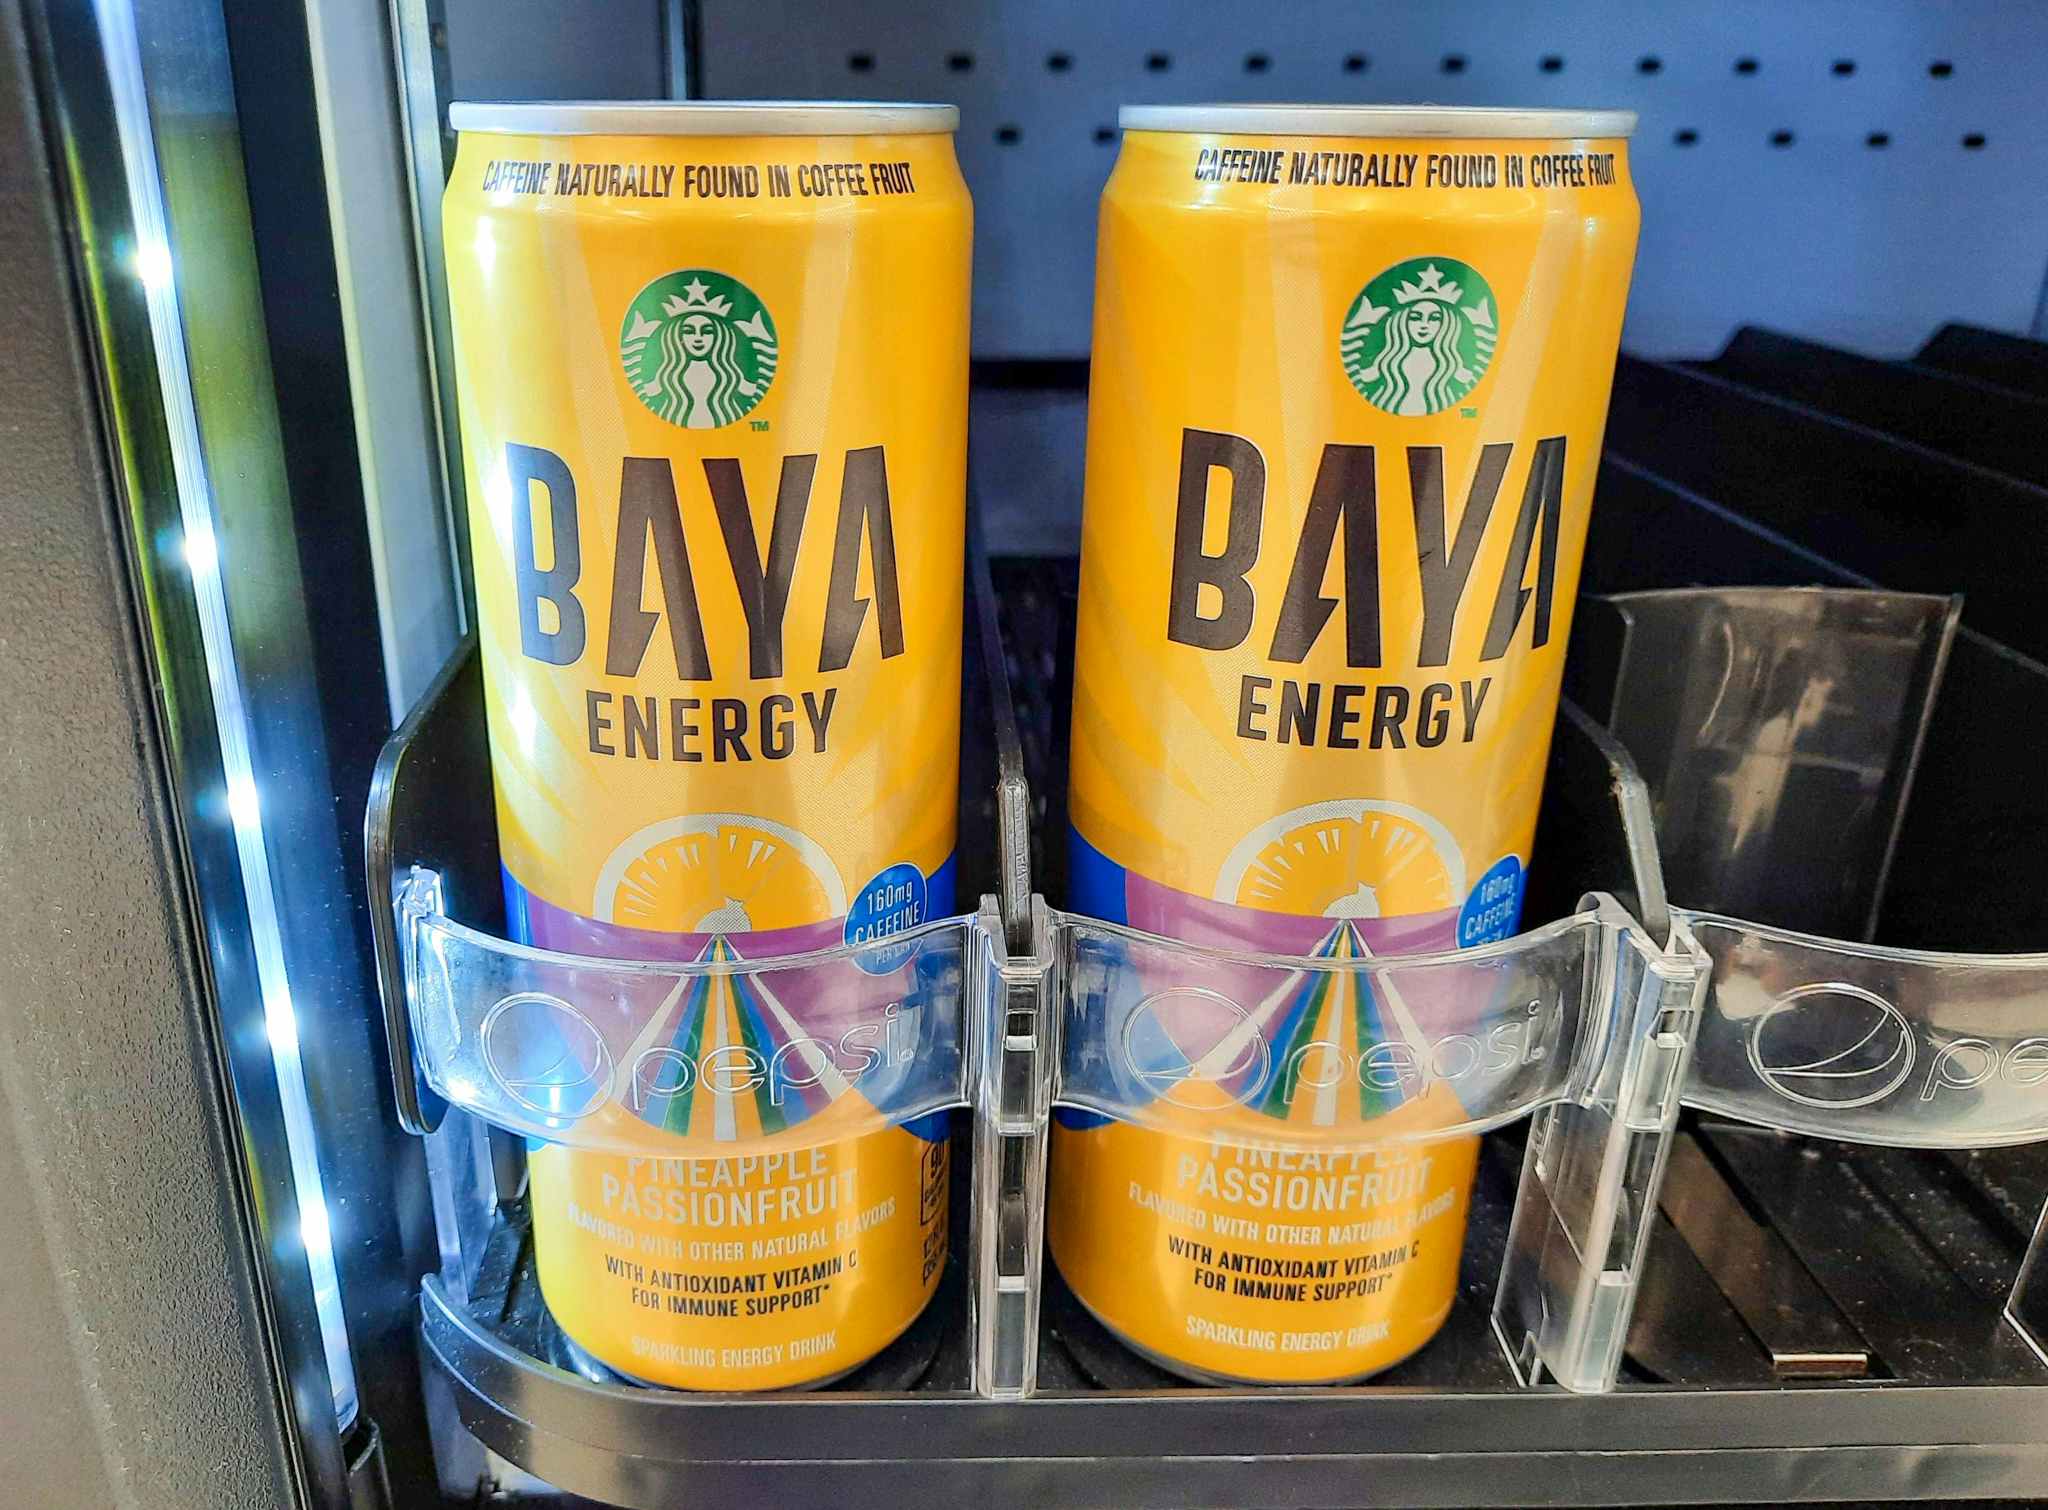 Starbucks Baya Energy inside drink cooler at Walmart